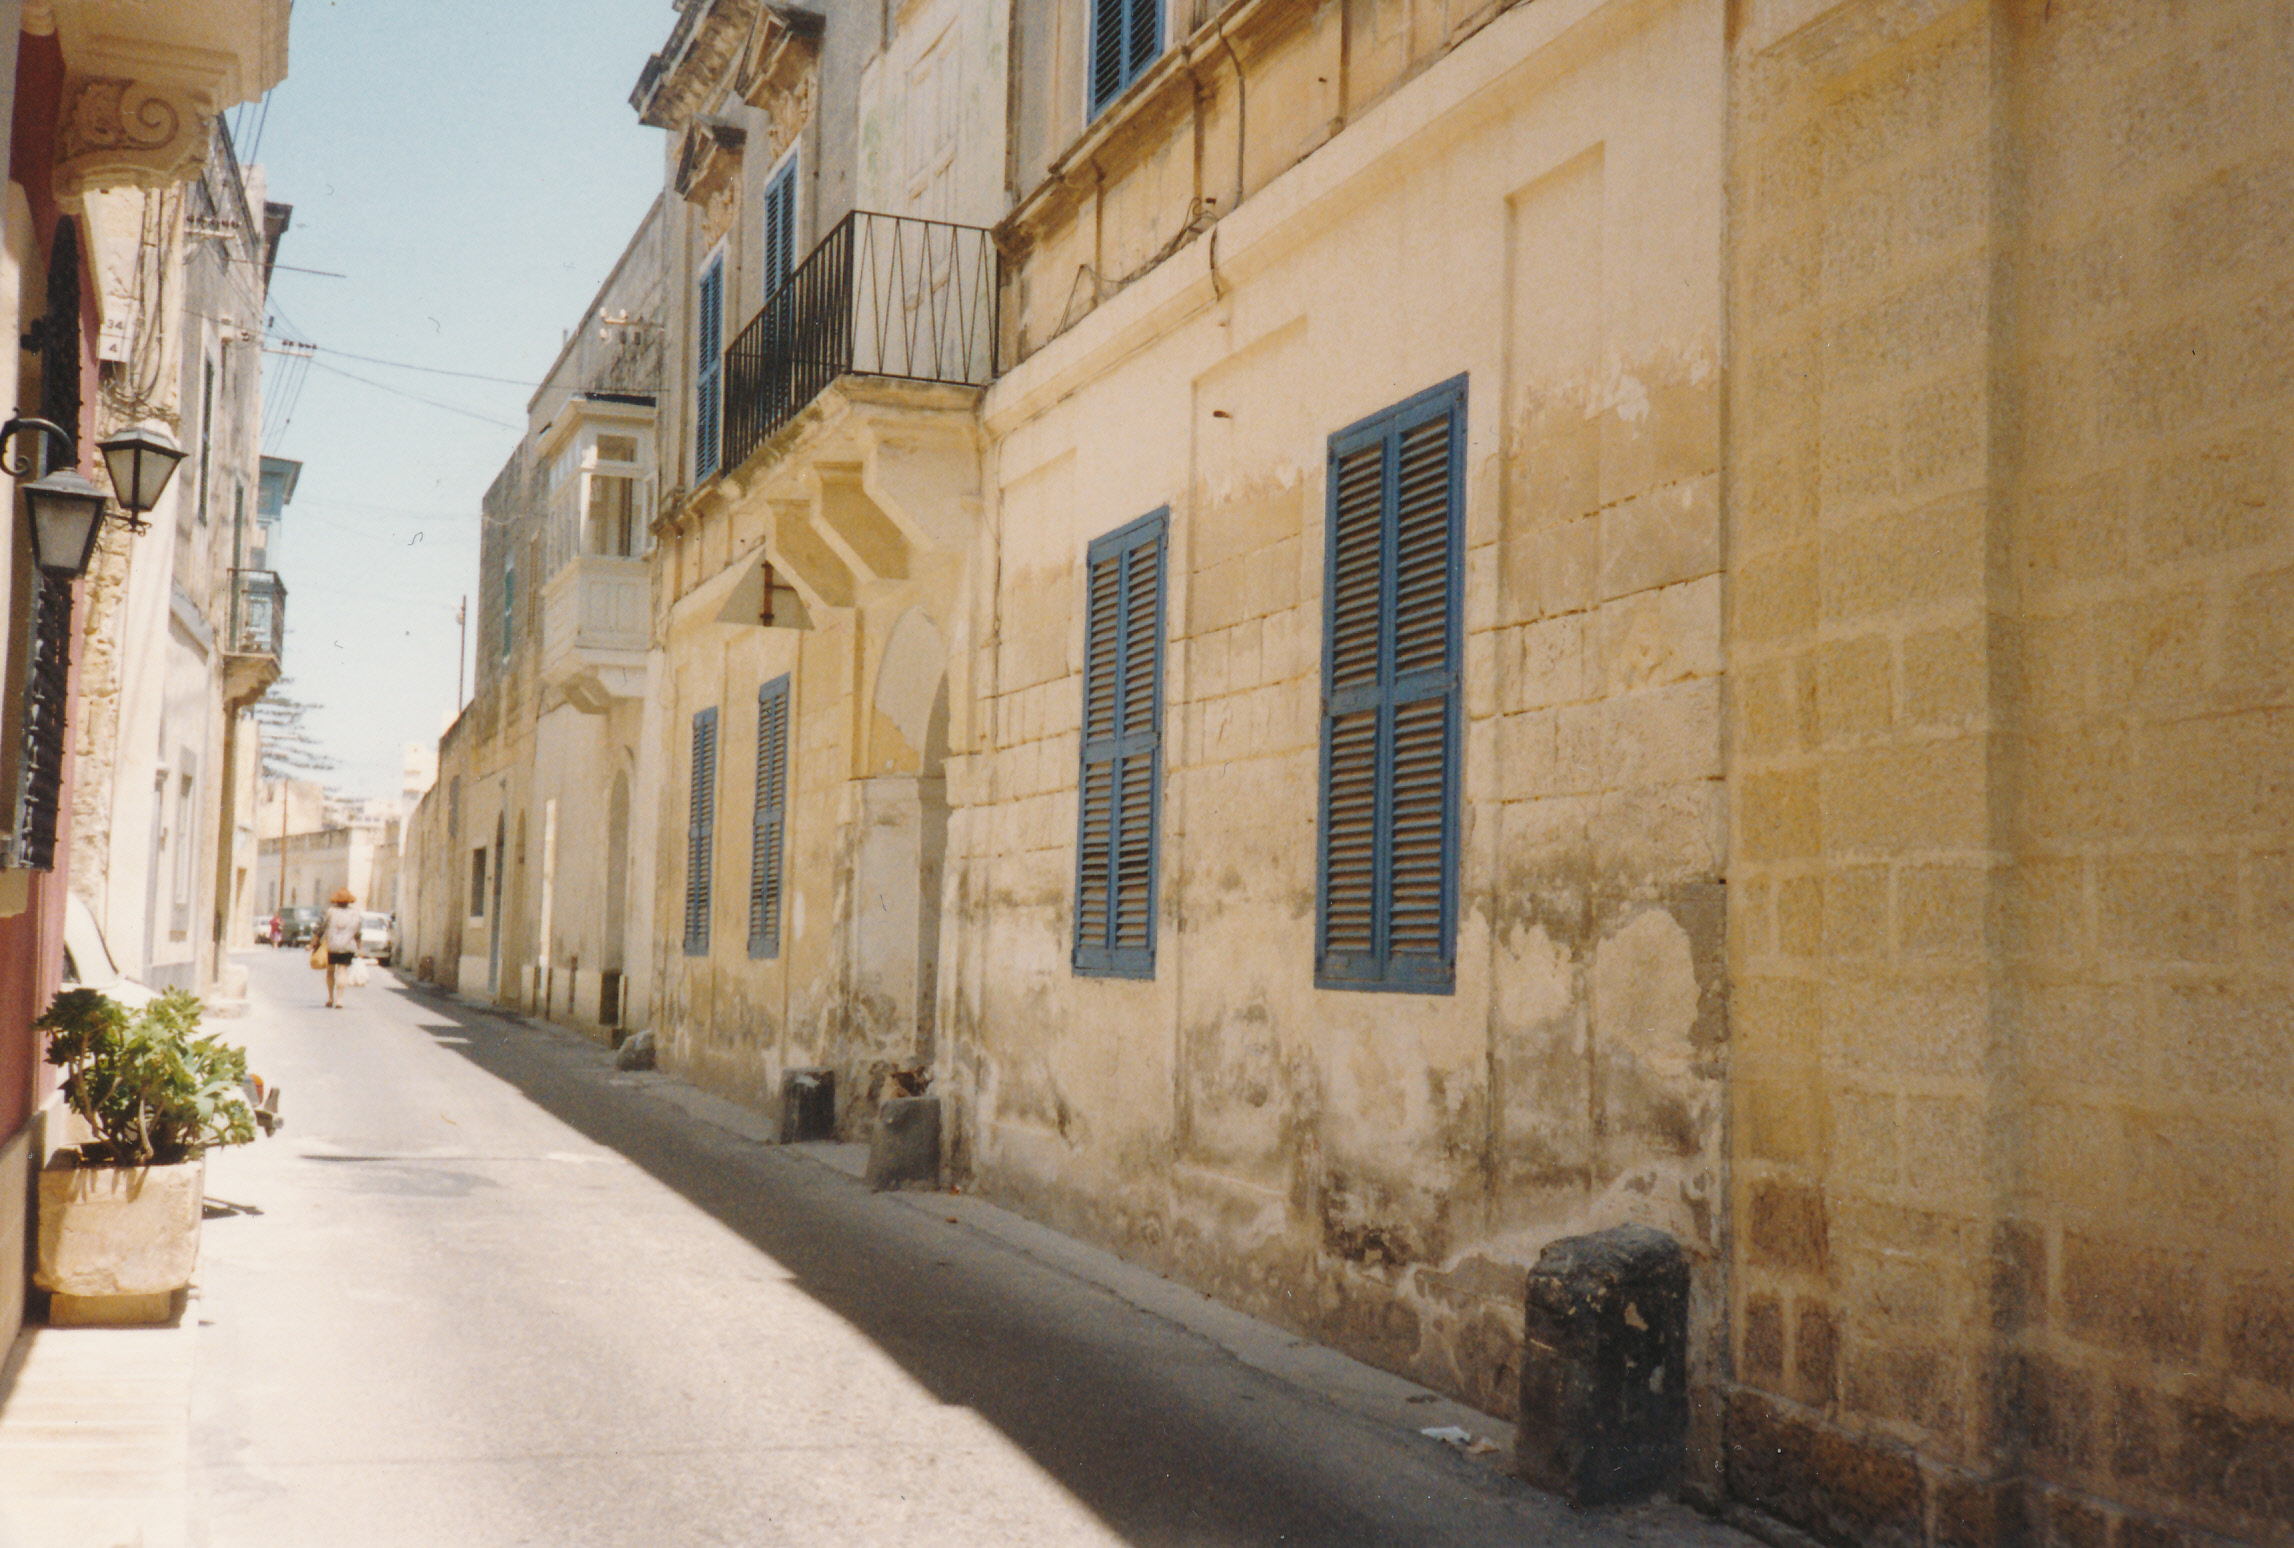 Burgess's house in Malta